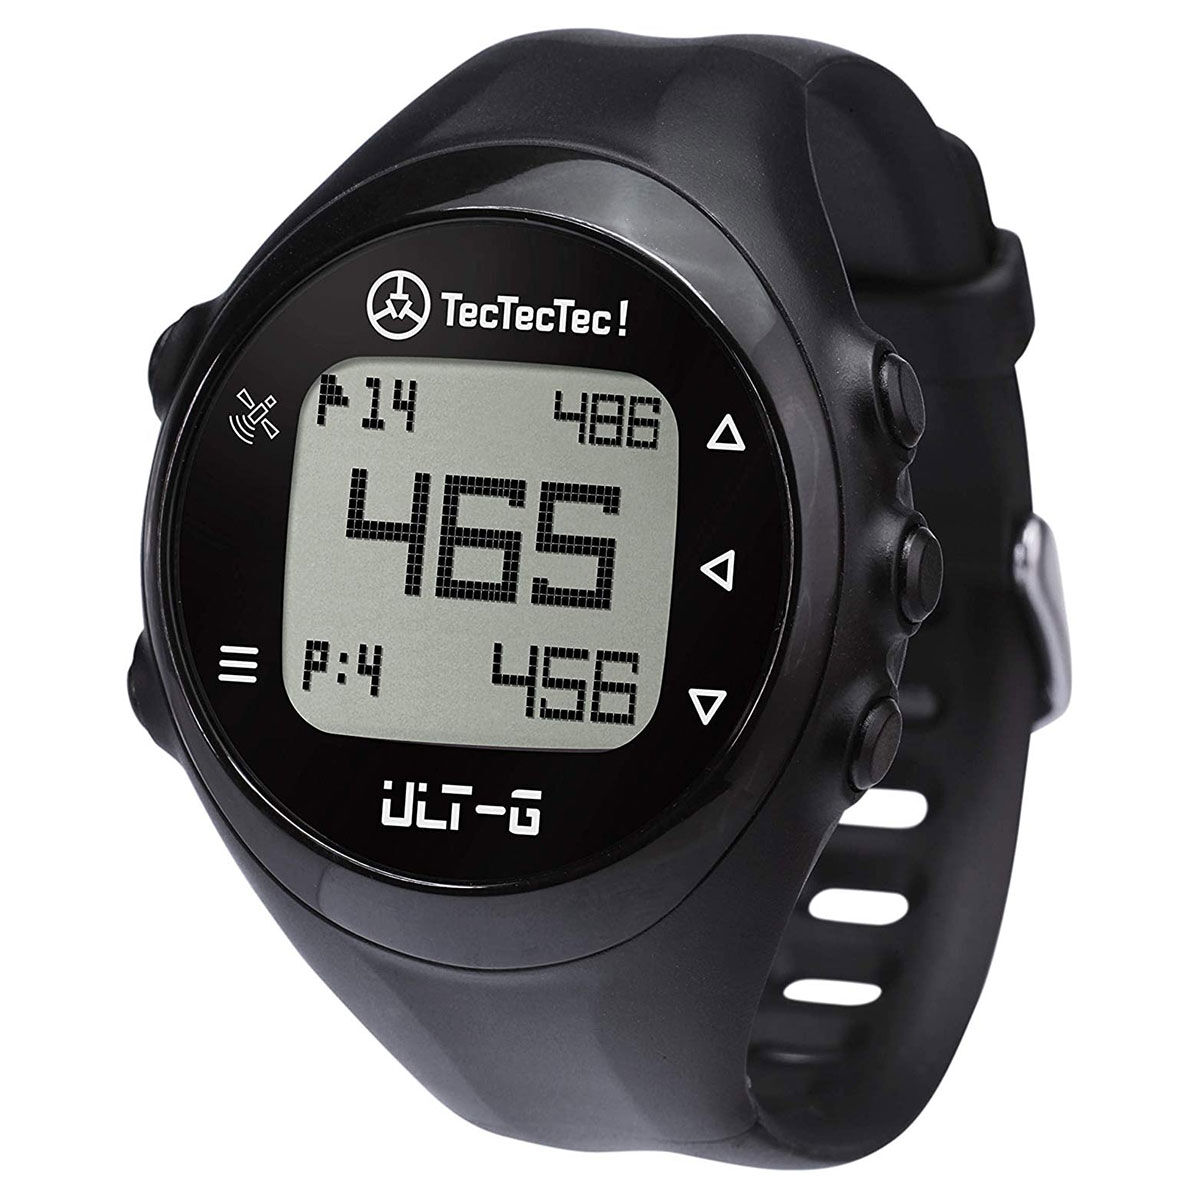 TecTecTec Black ULT-G Golf GPS Watch | American Golf, One Size